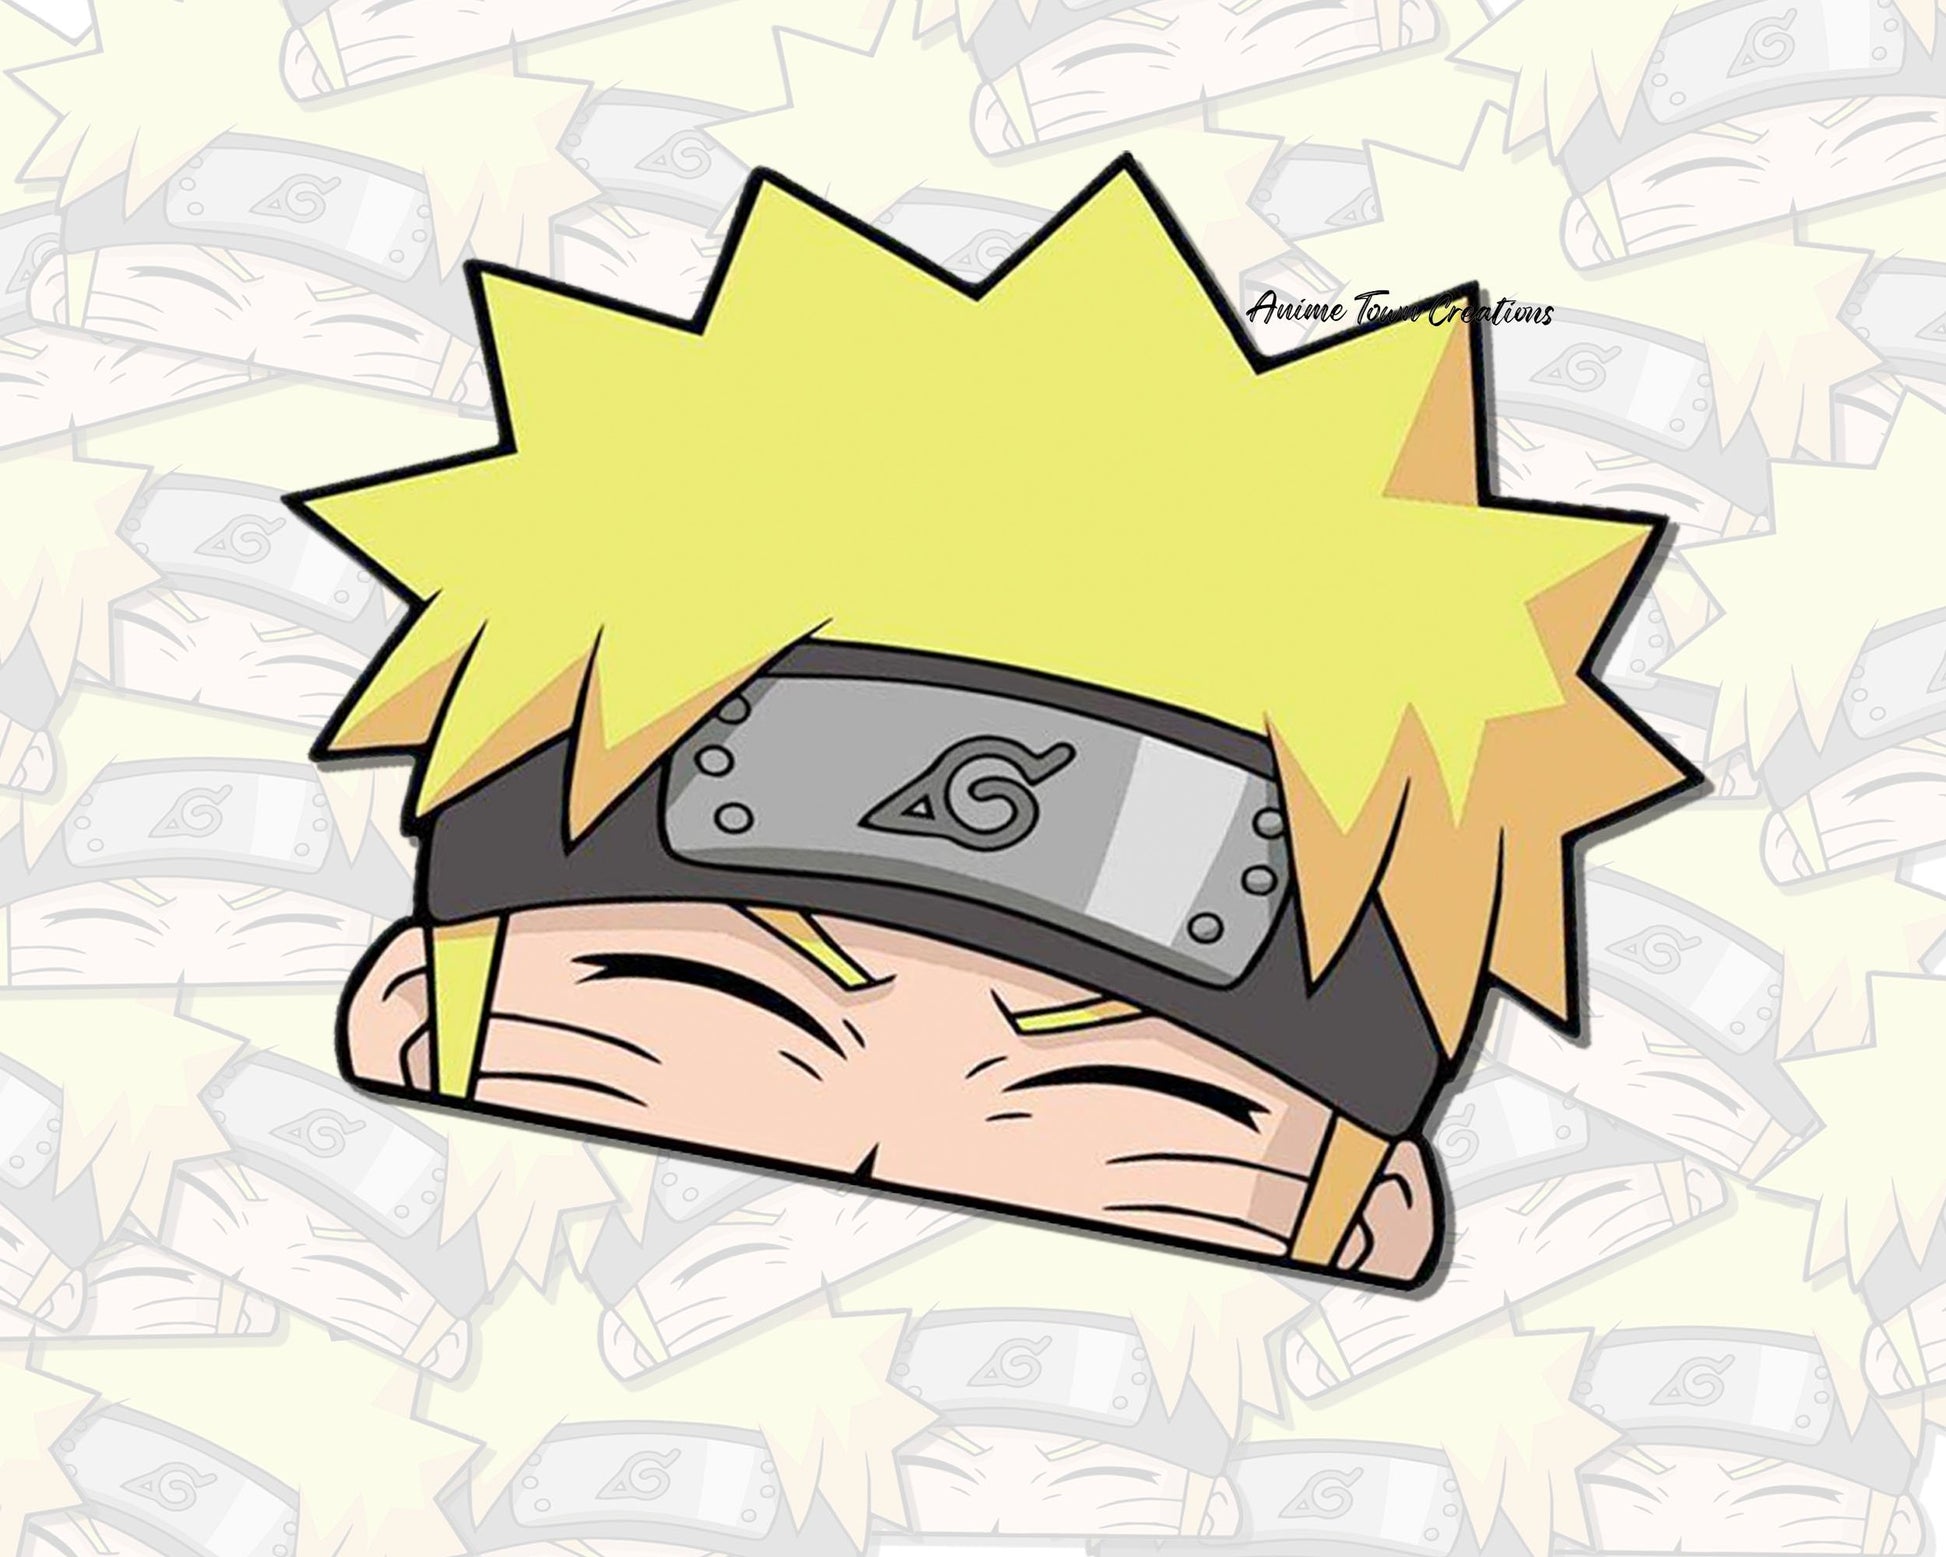 Naruto Face Squish Peeker Sticker Sticker – Anime Town Creations